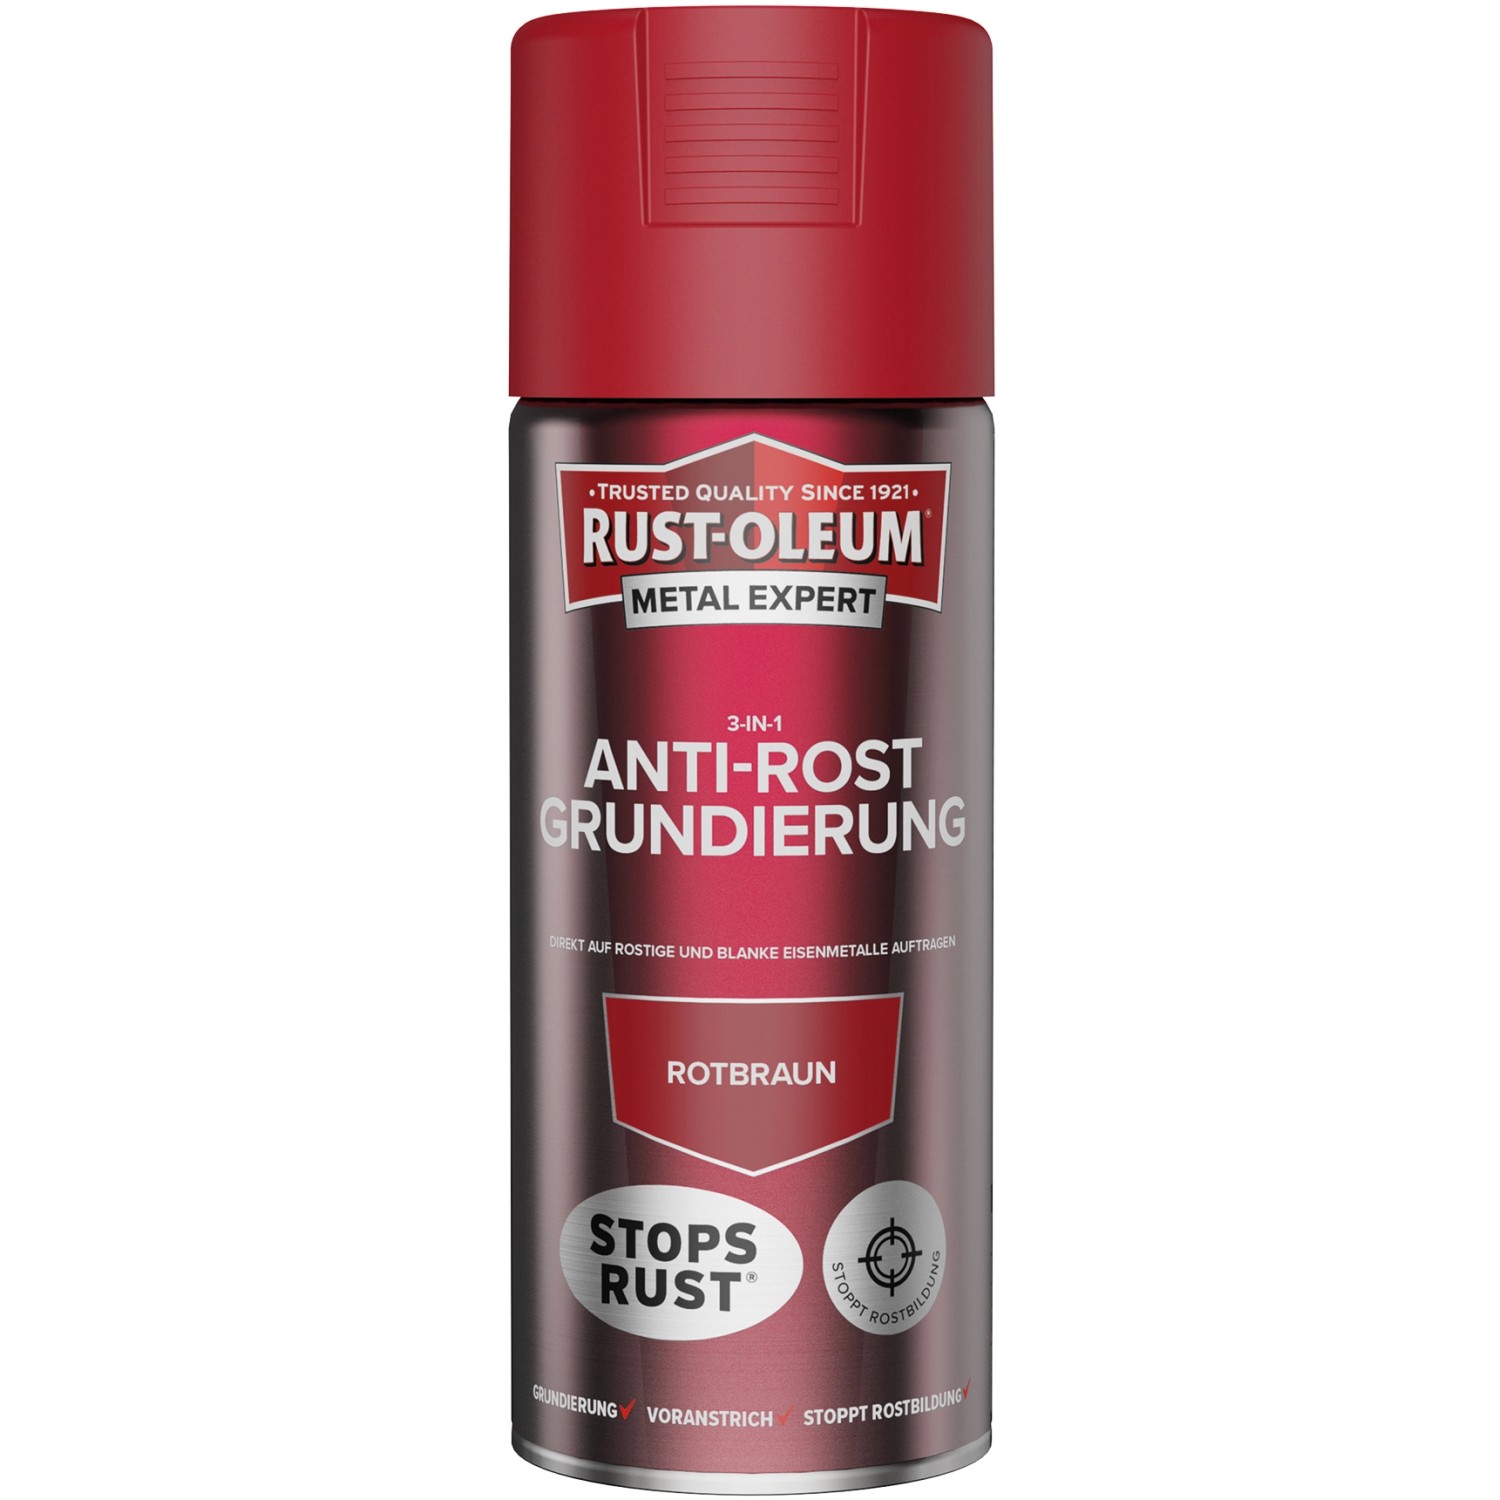 Rust-Oleum Metal Expert 3-in1 Anti-Rost Grundierung Sprühfarbe Rotbraun 400 ml